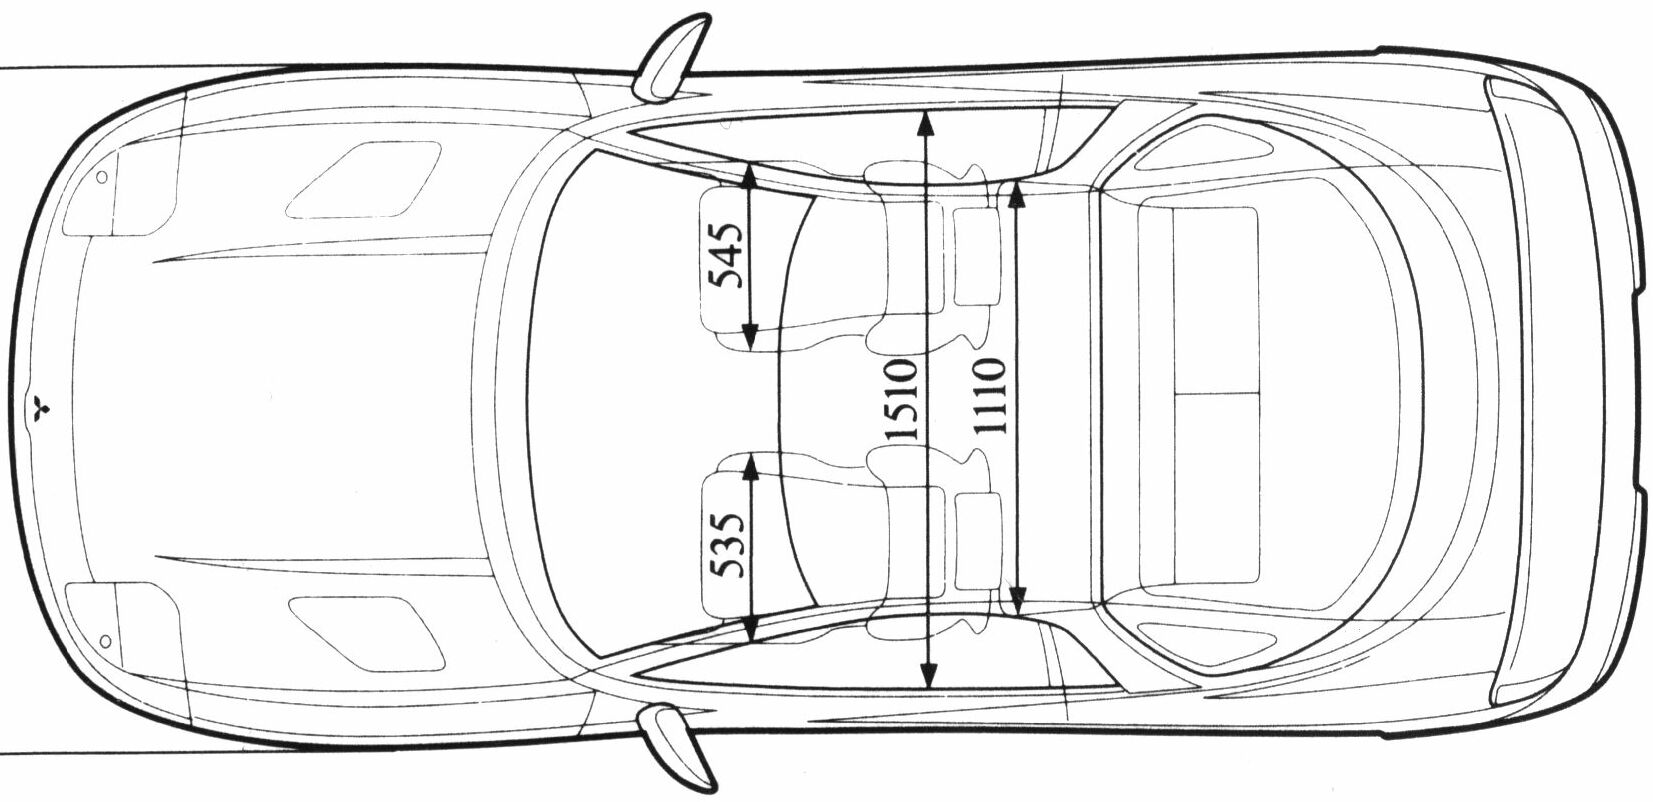 Mitsubishi GTO blueprint